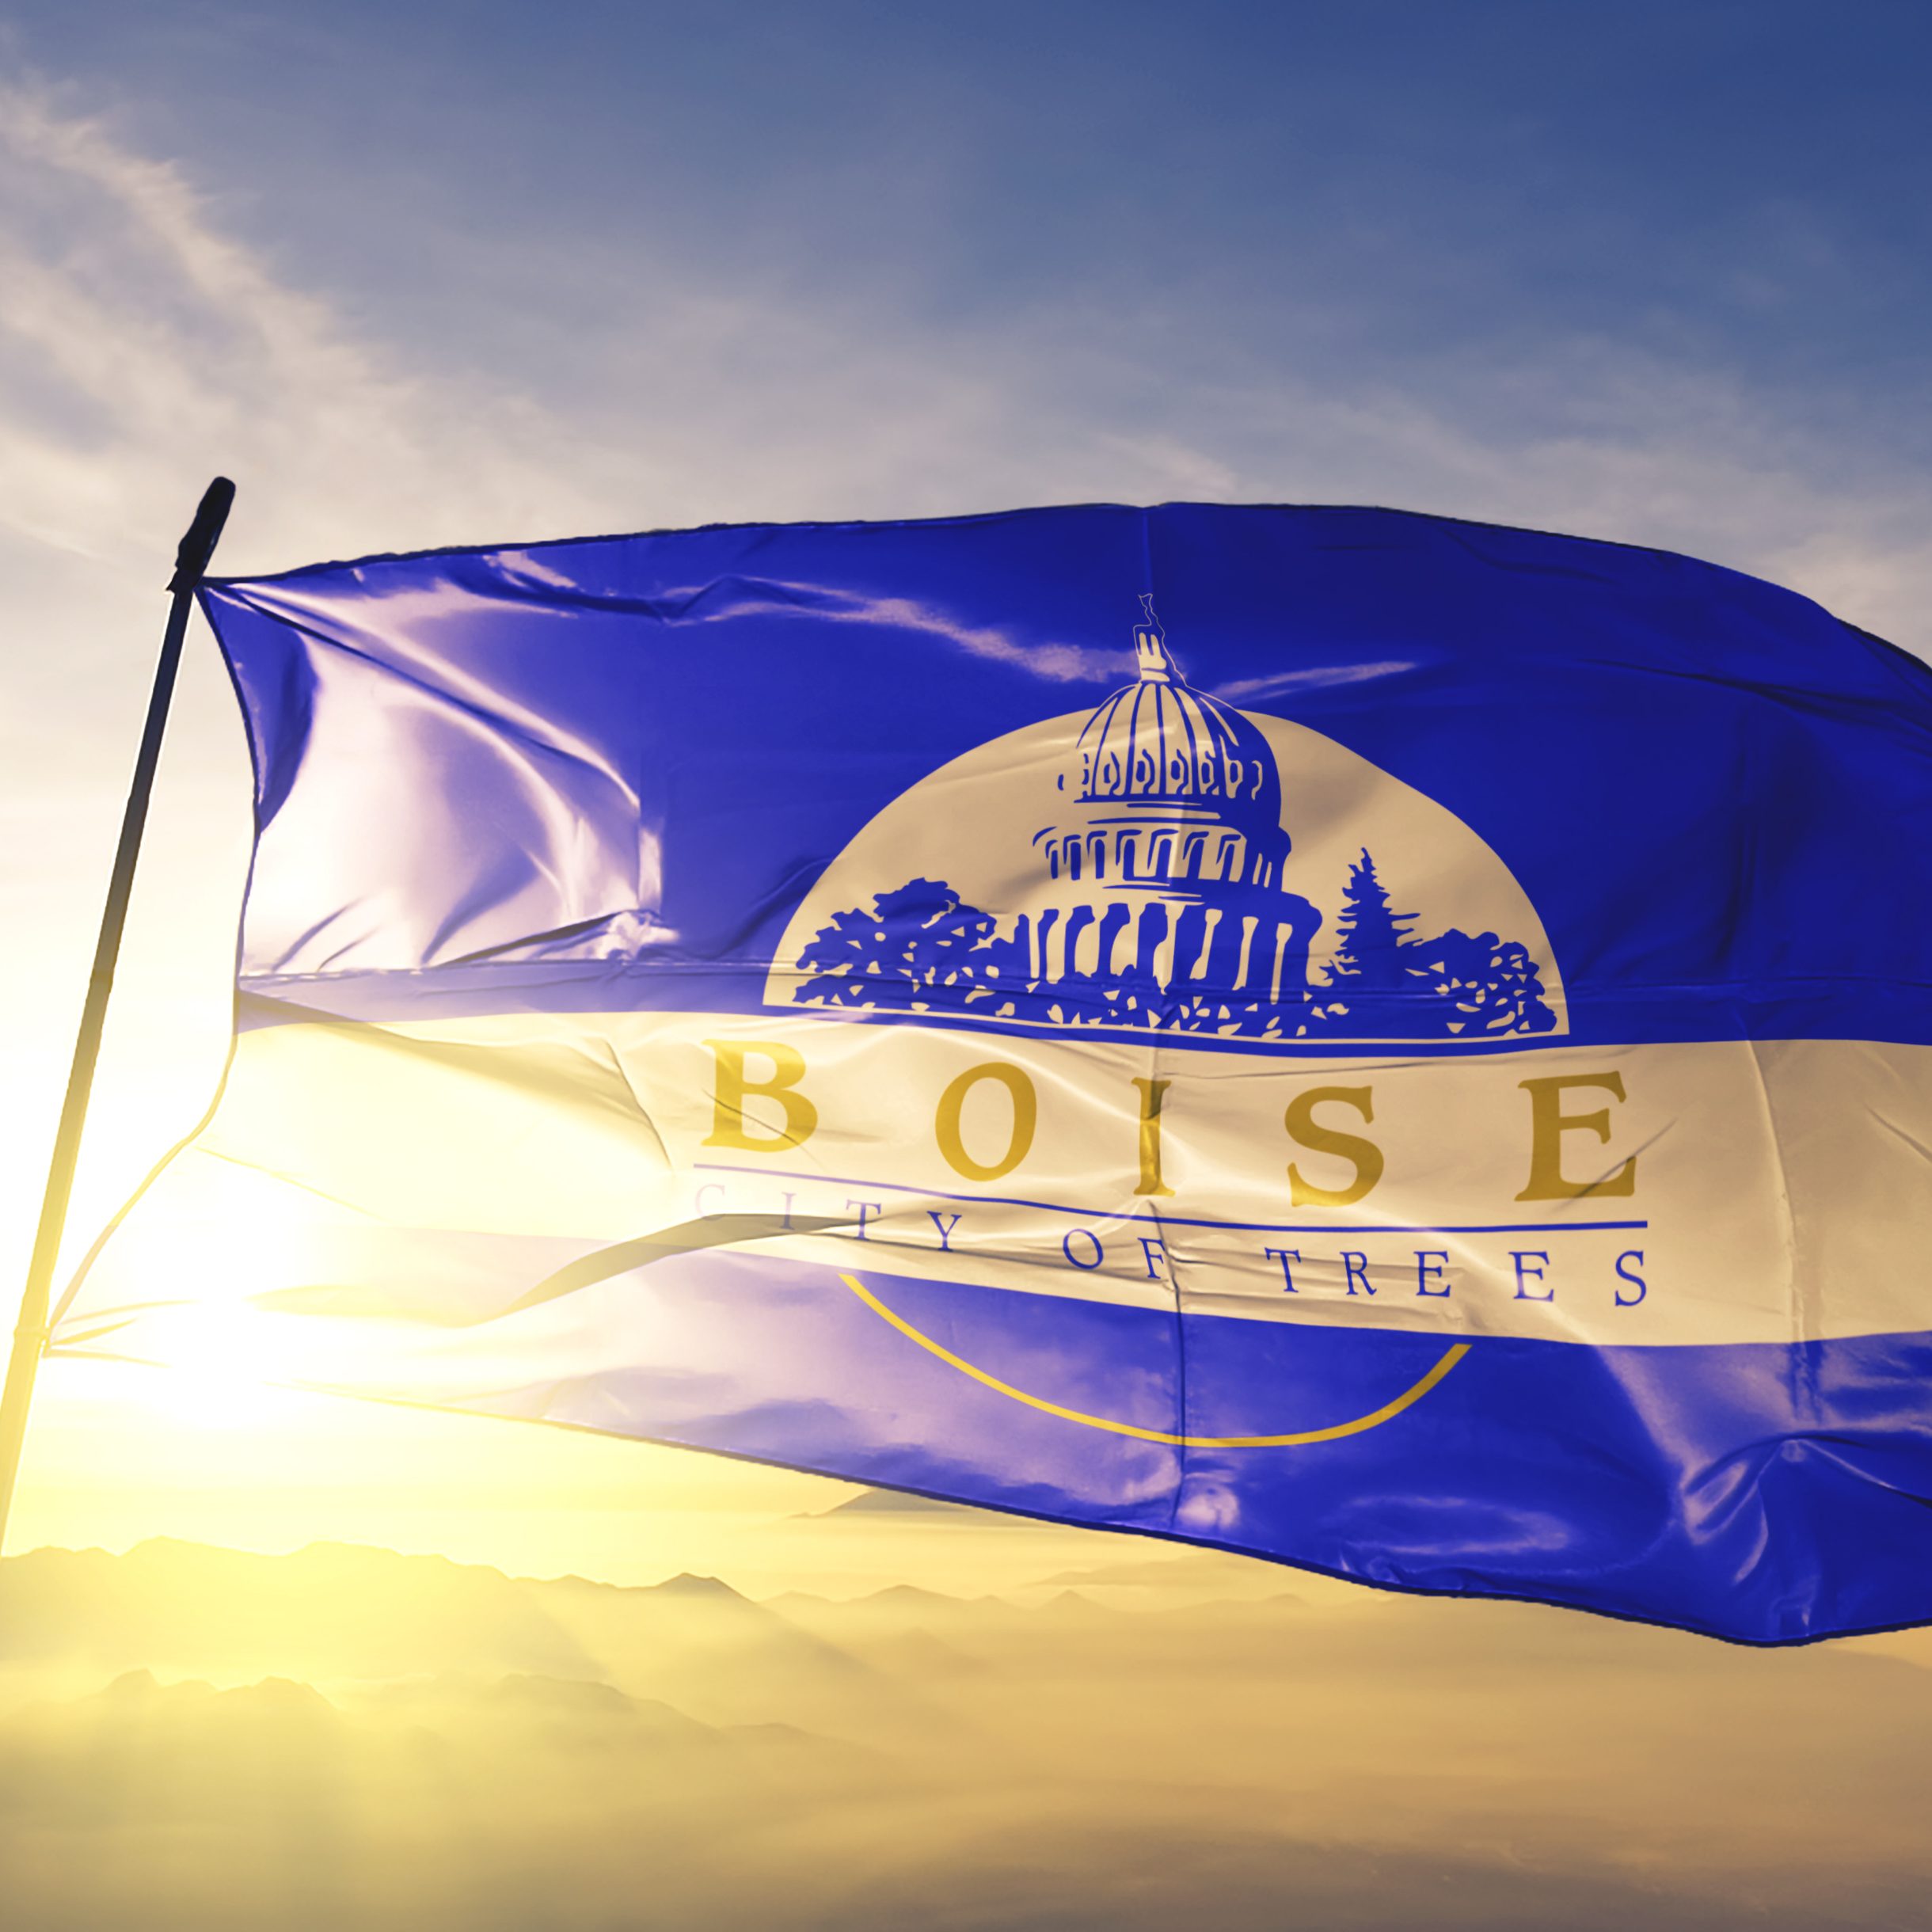 Boise city capital of Idaho of United States flag on flagpole textile cloth fabric waving on the top sunrise mist fog